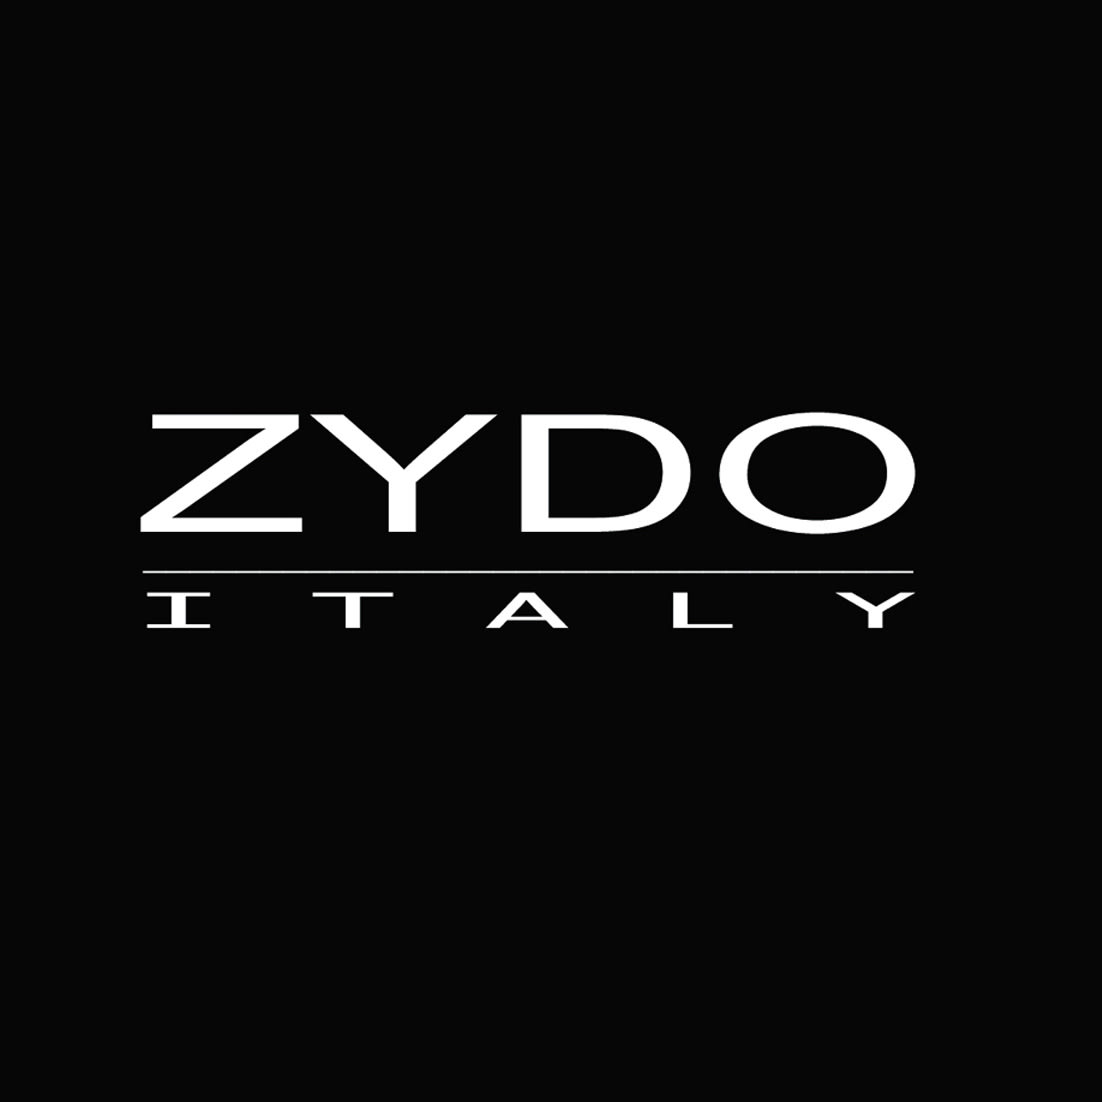 ZYDO logo